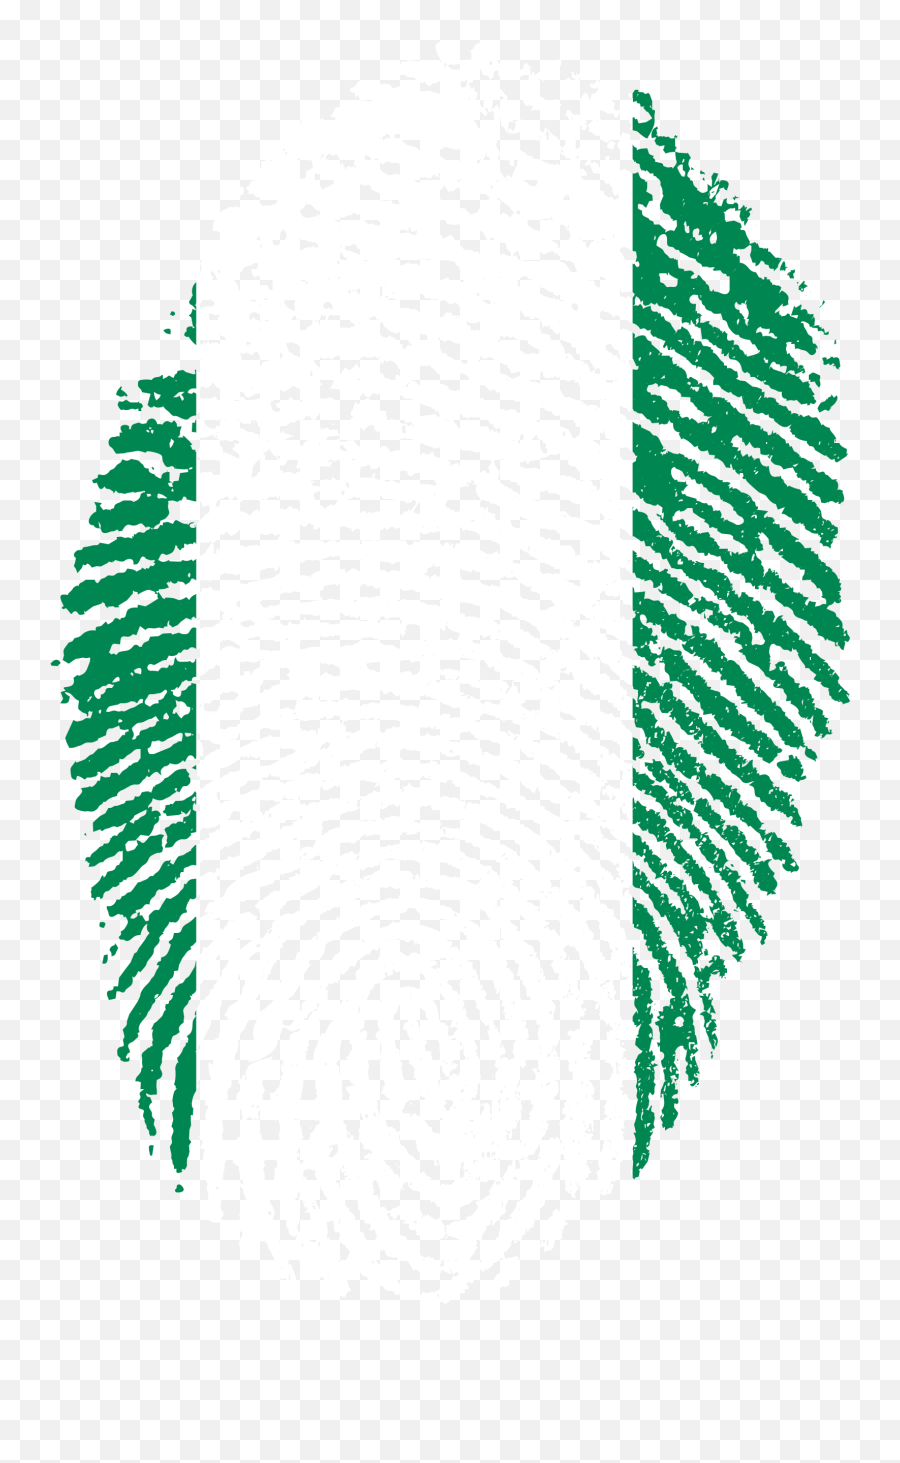 Snappygoatcom - Free Public Domain Images Snappygoatcom Puerto Rico Flag Thumbprint Emoji,Thumbprint Png